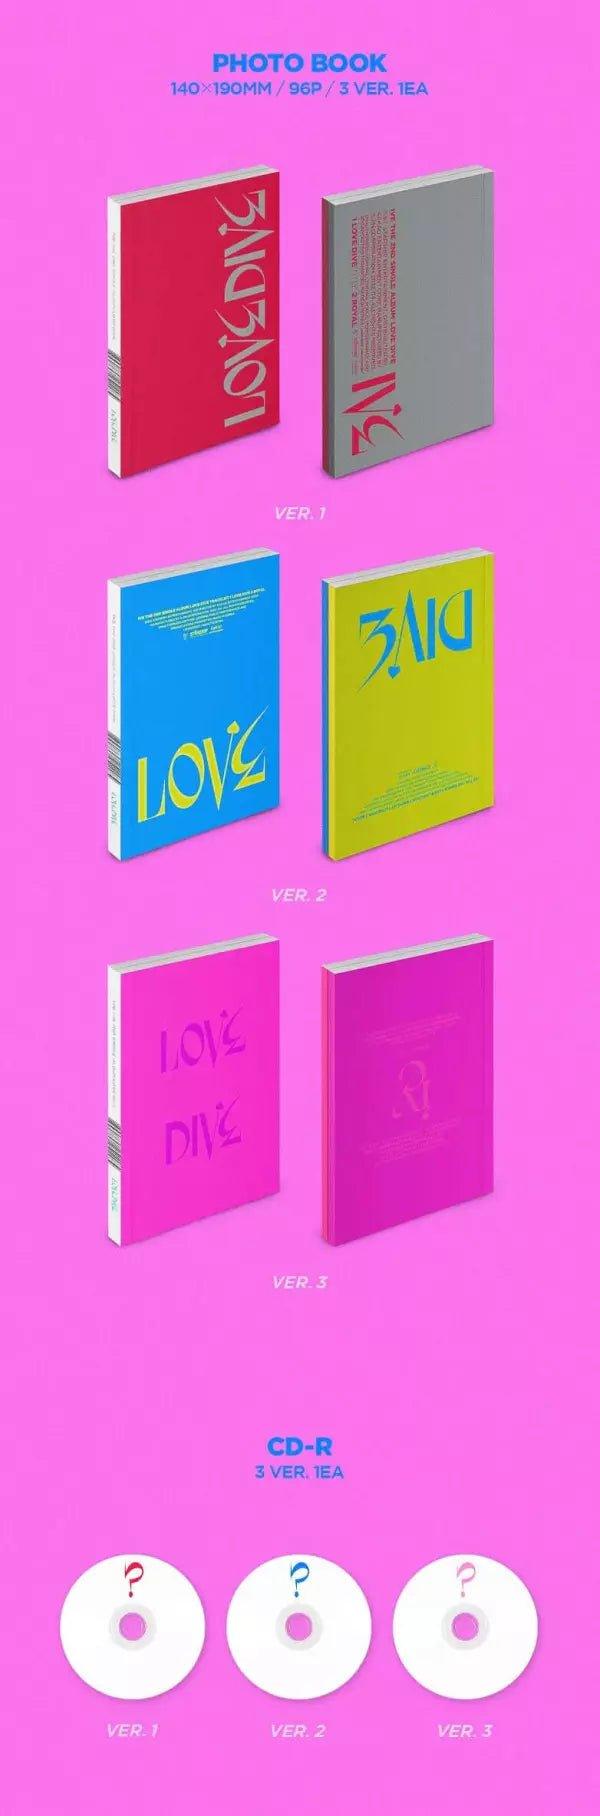 IVE - 2ND SINGLE ALBUM LOVE DIVE - K-POP WORLD (6767459106951)